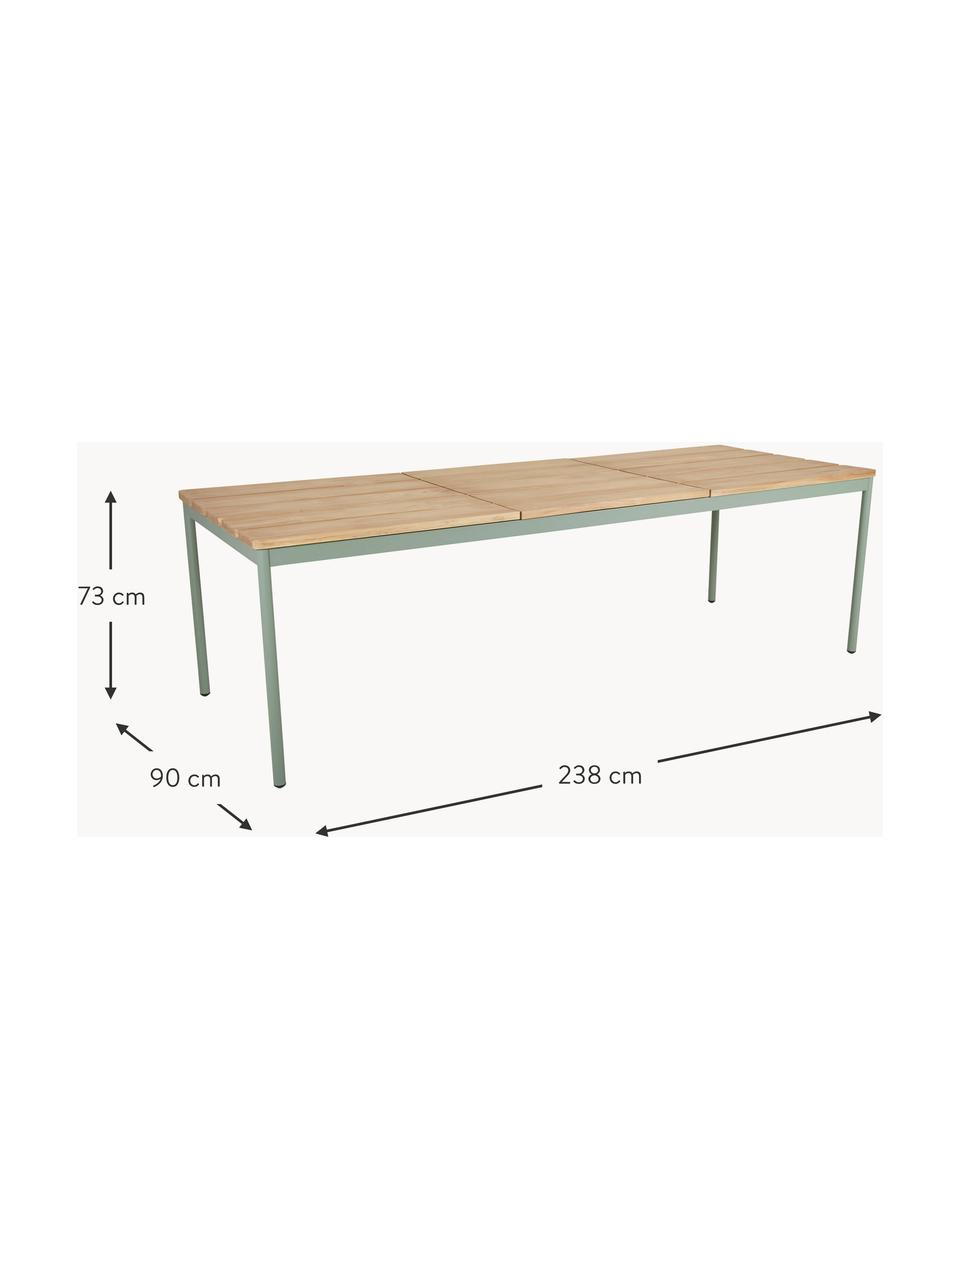 Gartentisch Nox mit Teakholzplatte, Tischplatte: Teakholz, geölt, Gestell: Aluminium, beschichtet, Salbeigrün, B 238 x T 90 cm